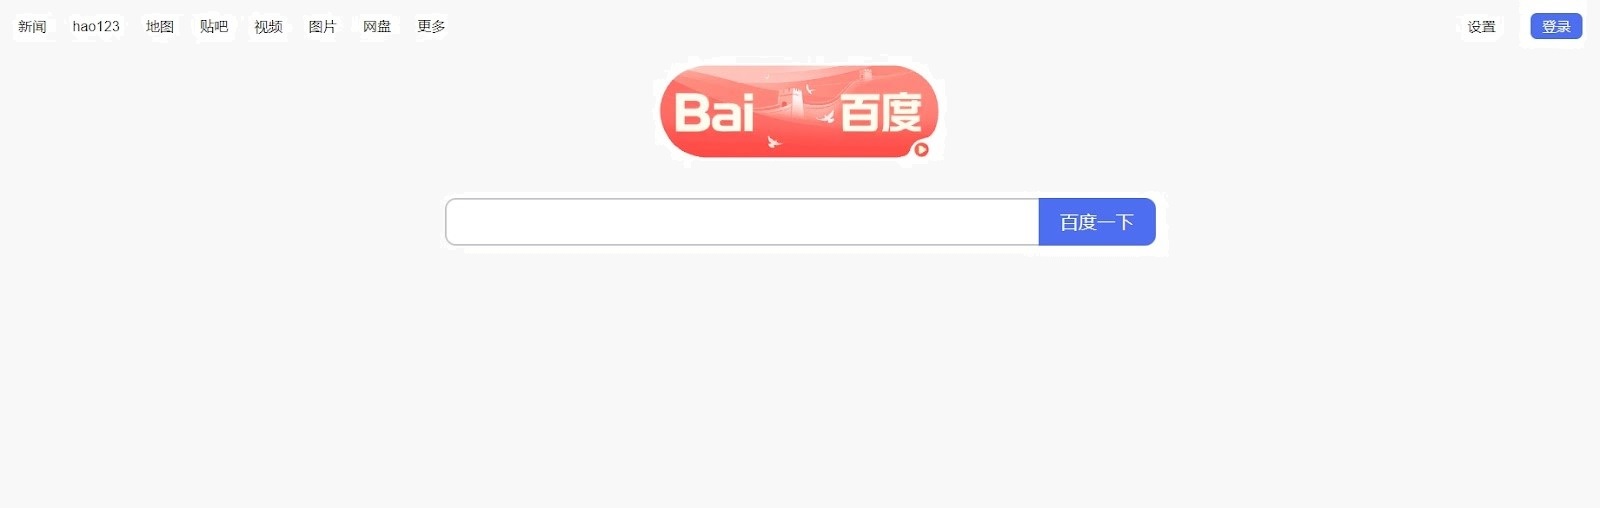 Baidu - альтернативный поисковик